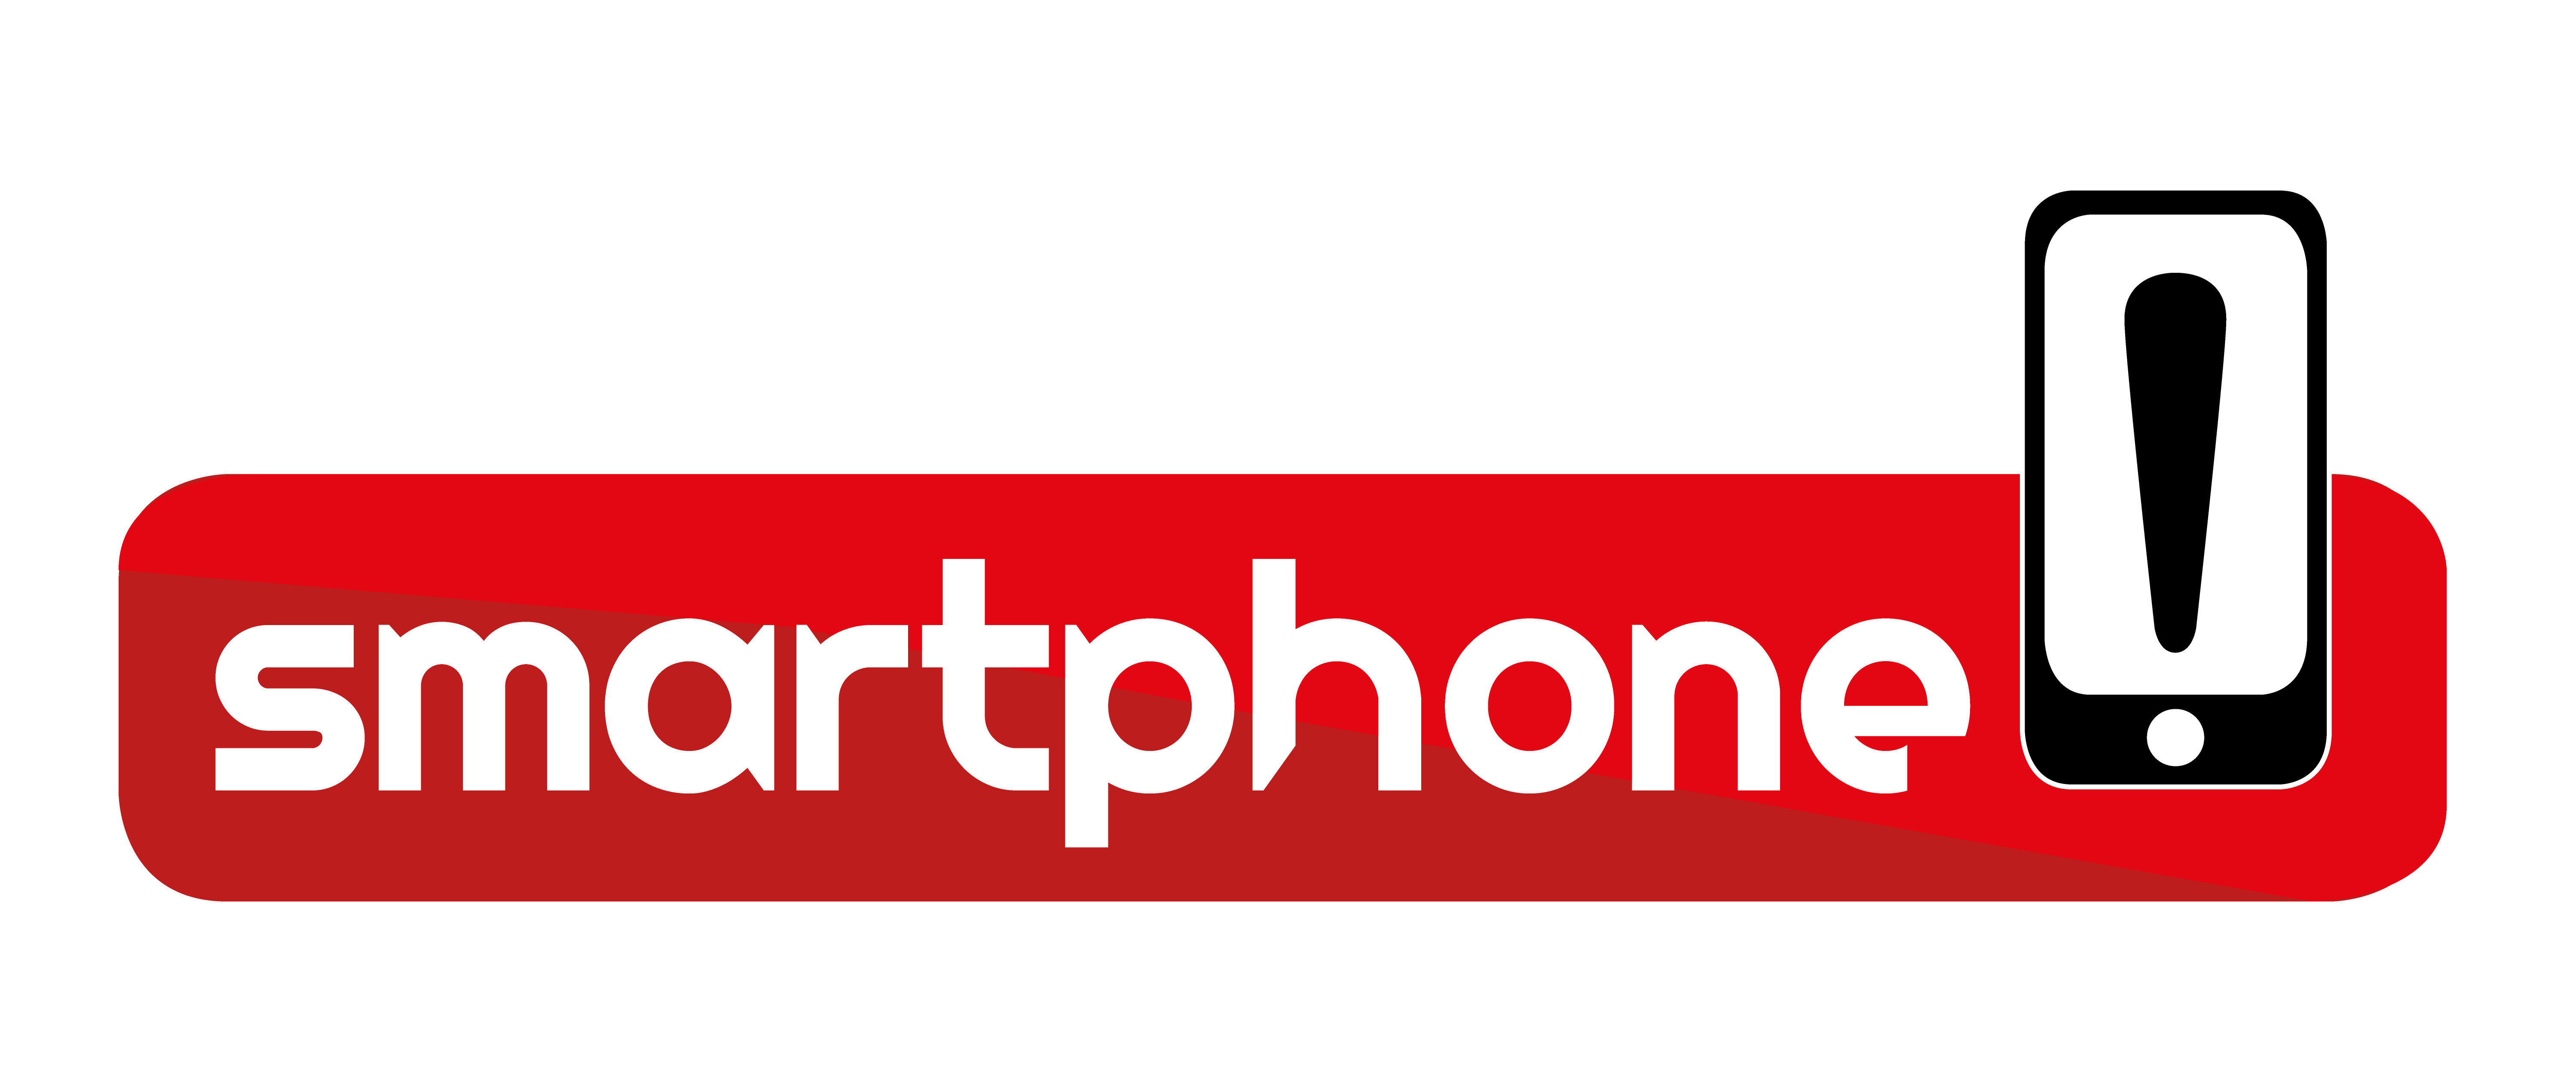 Attention Smartphone!